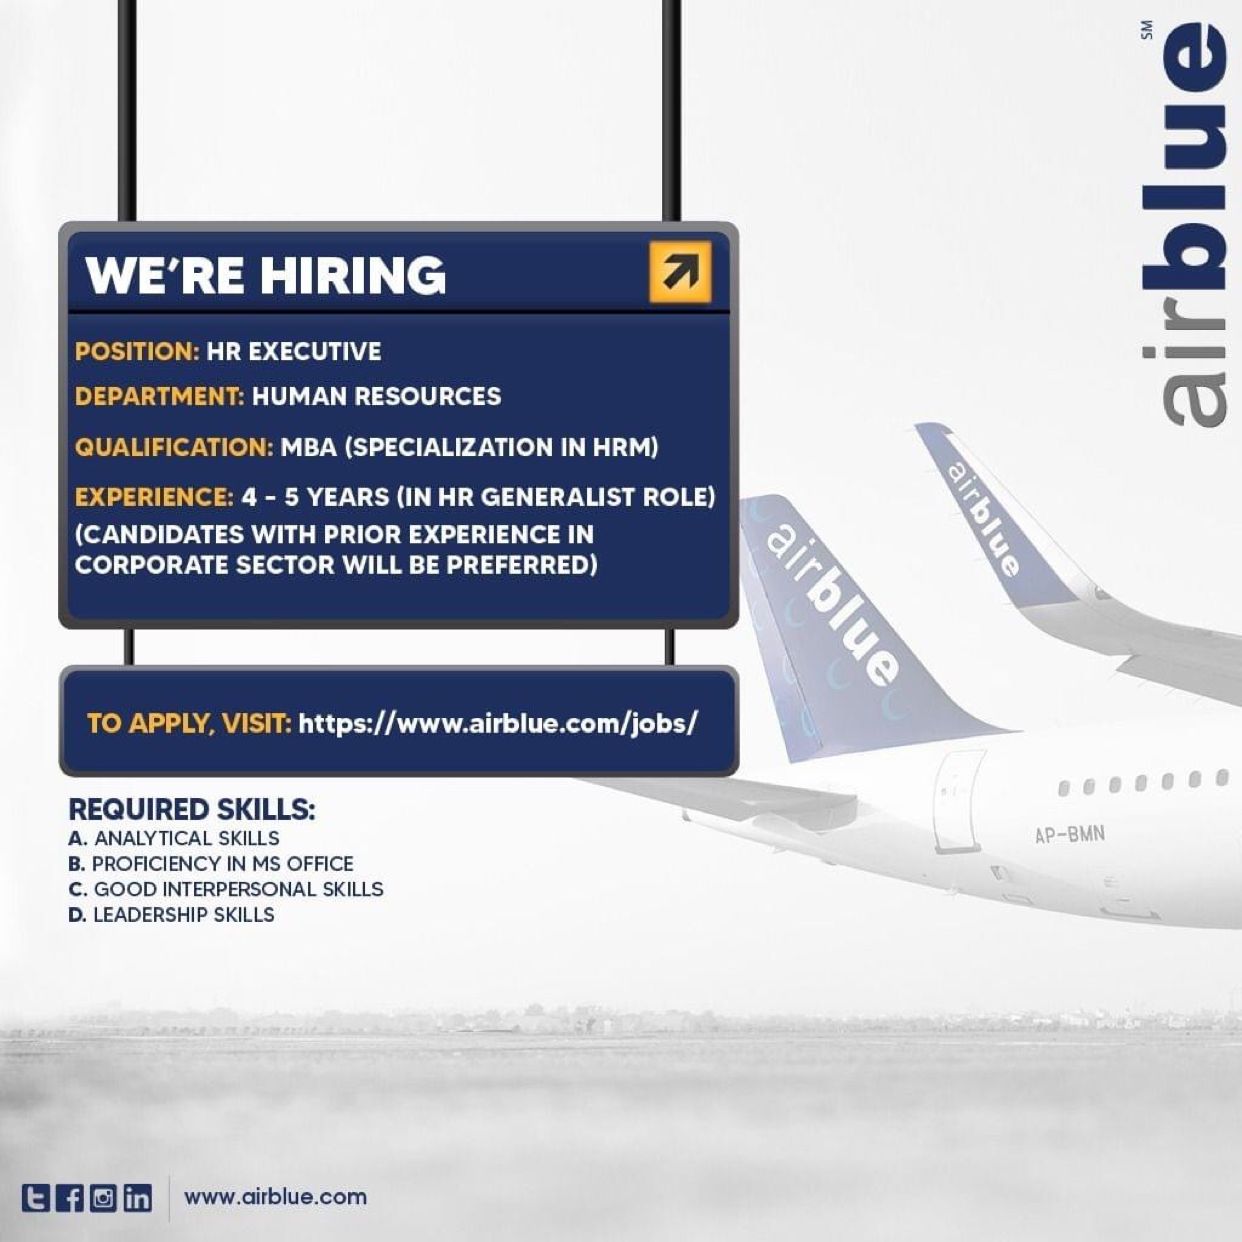 AirBlue Pakistan Jobs For HR Executive